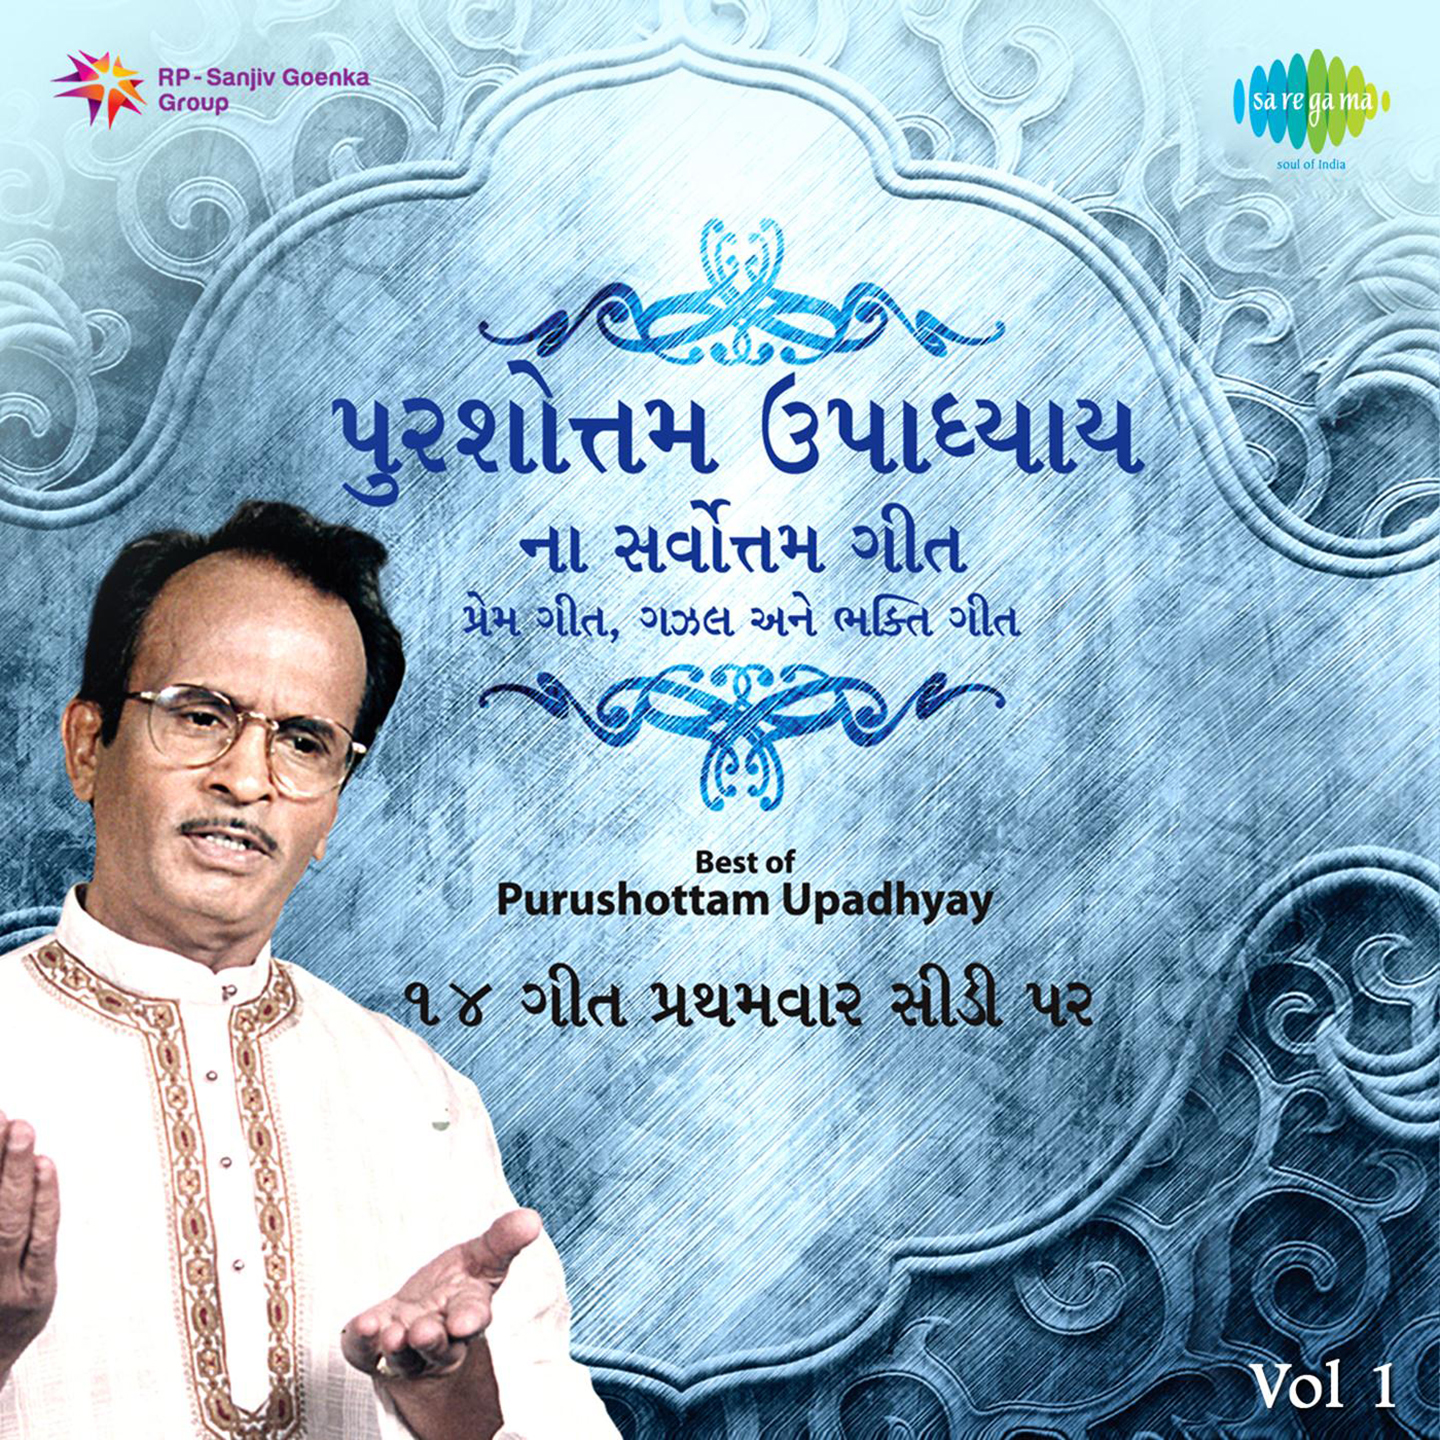 The Best Of Purushottam Upadhyay